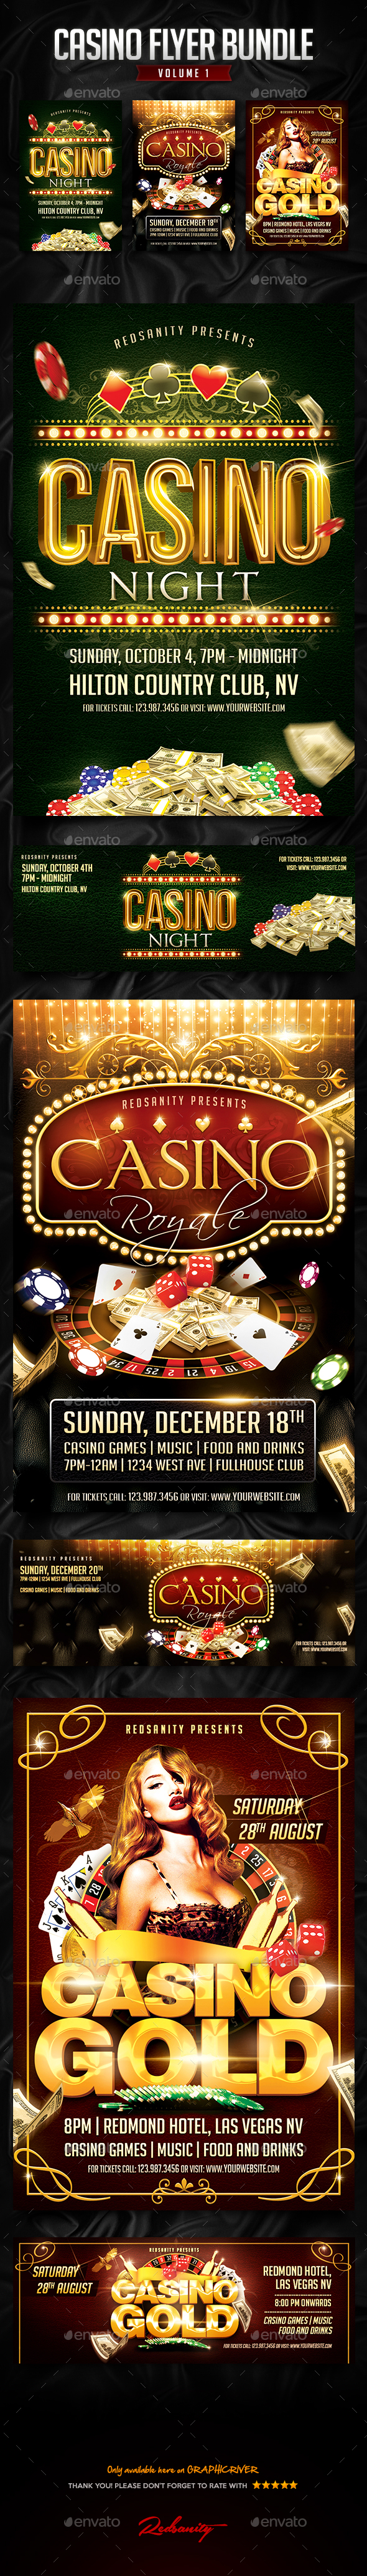 Casino trip flyer template